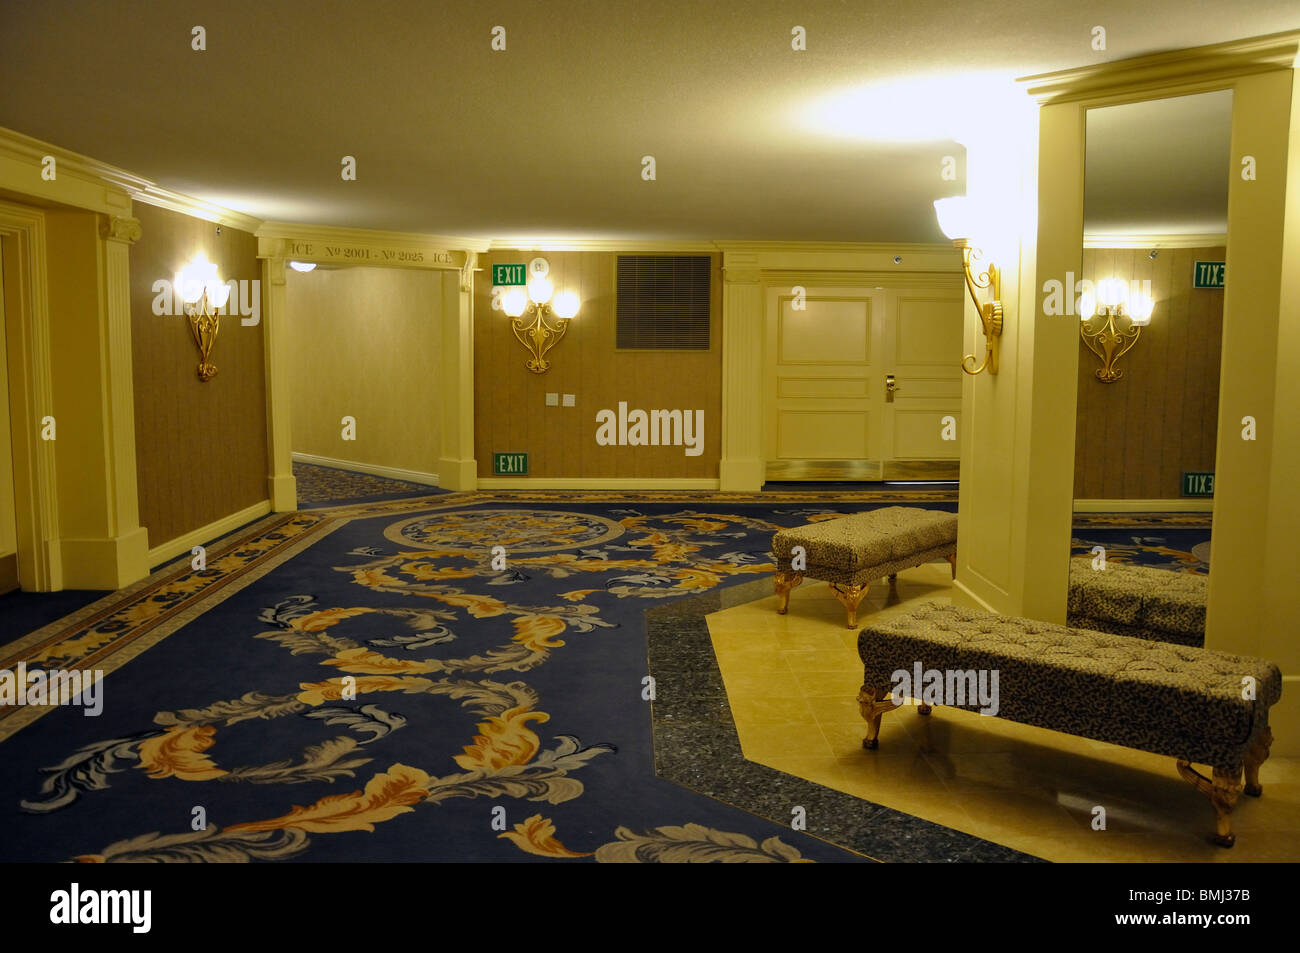 Paris hotel las vegas interior hi-res stock photography and images - Alamy